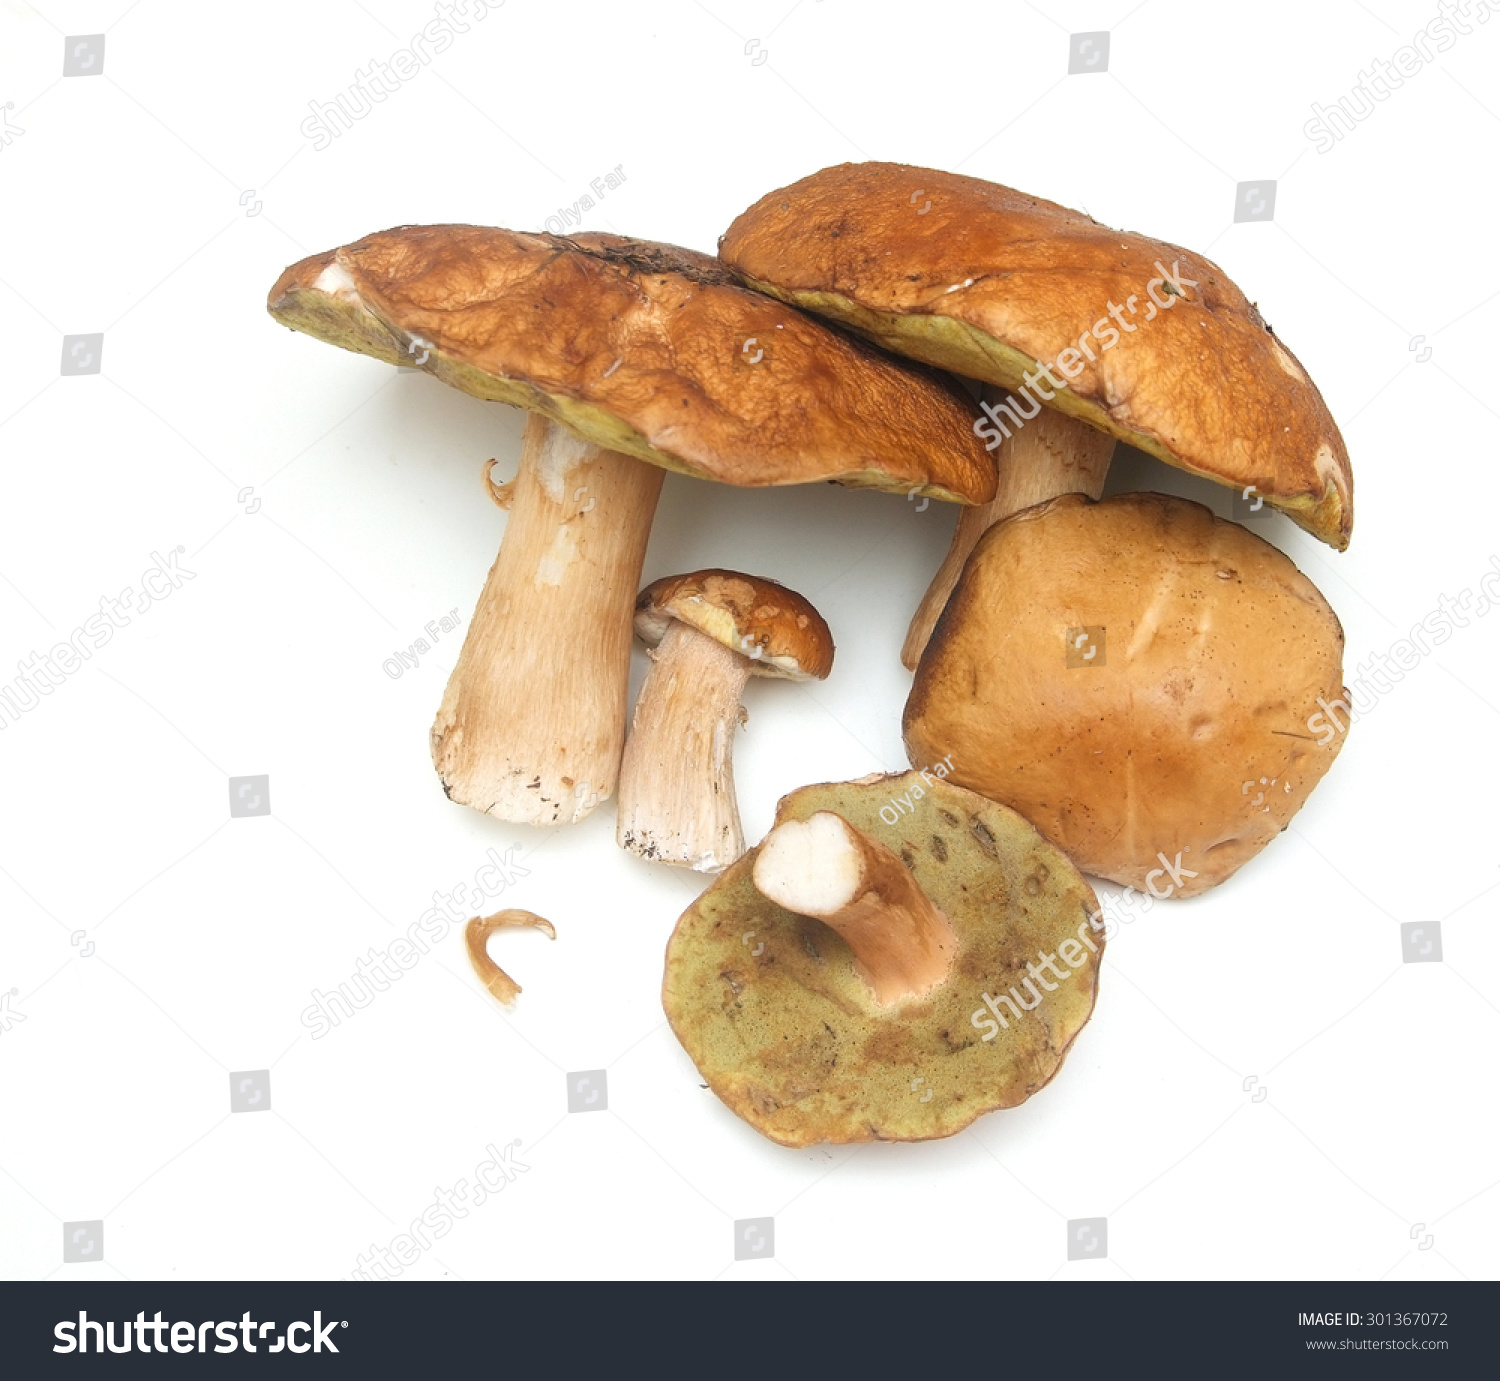 White mushrooms on a white background #301367072